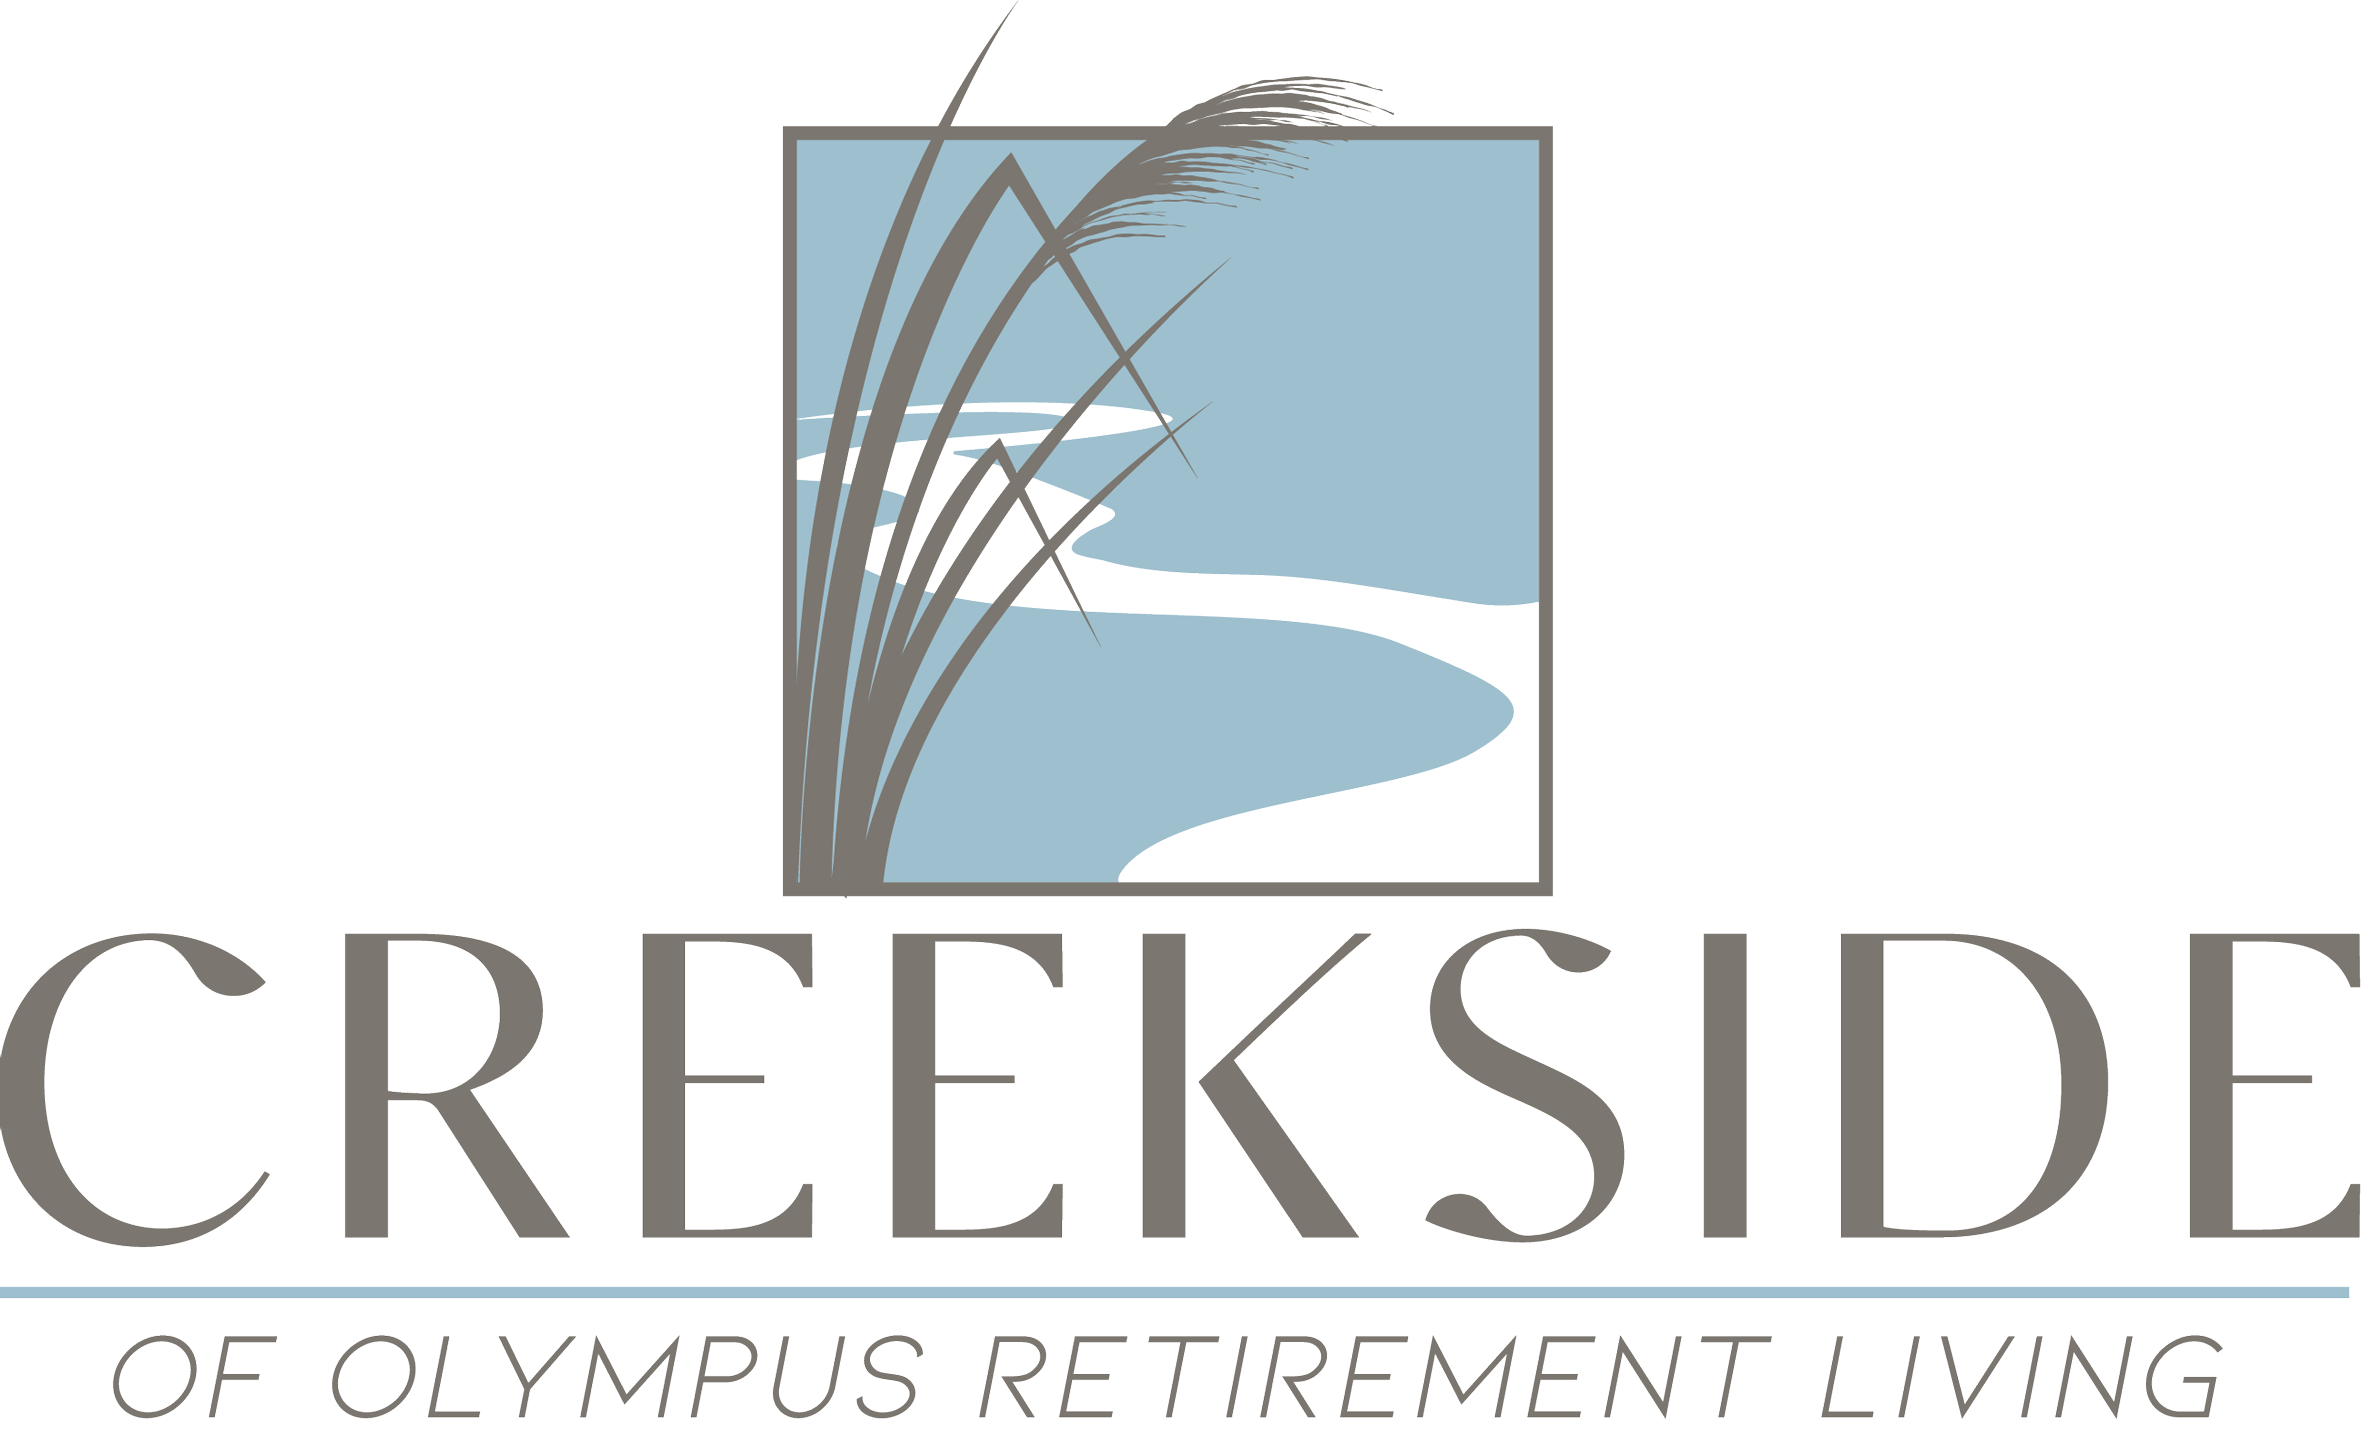 Creekside Olympus Retirement Living